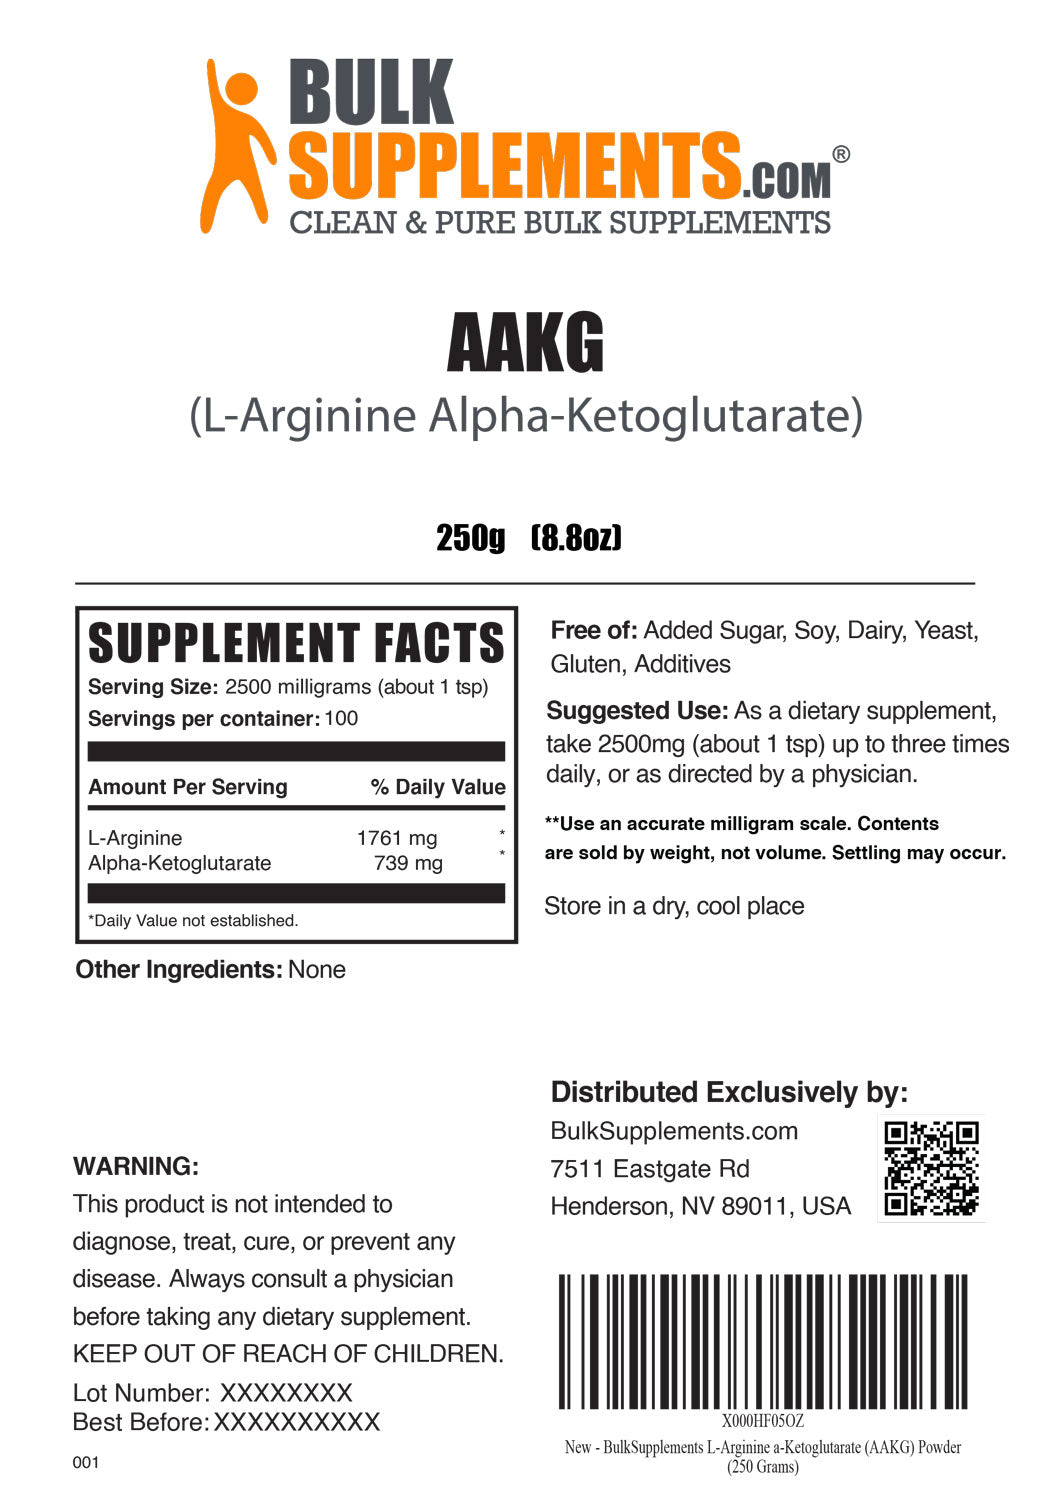 AAKG Arginine Supplement Facts, 250g Bag